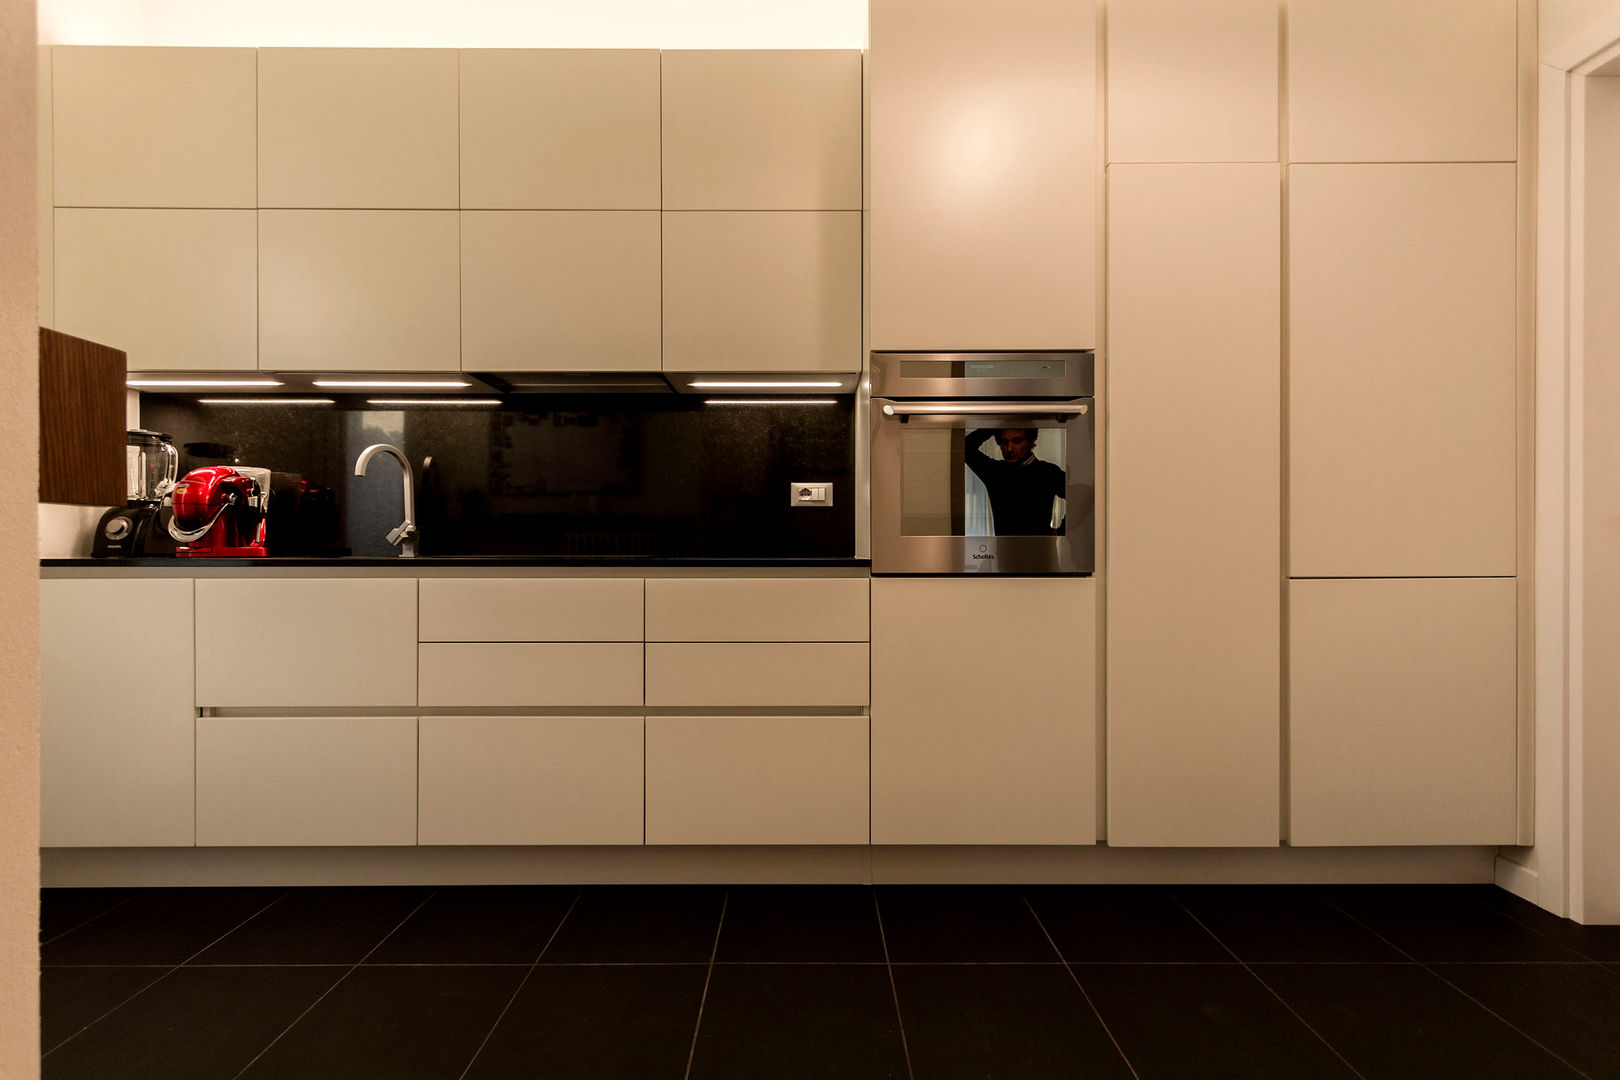 Appartamento Residenziale - Cernobbio 2015, Galleria del Vento Galleria del Vento Modern kitchen